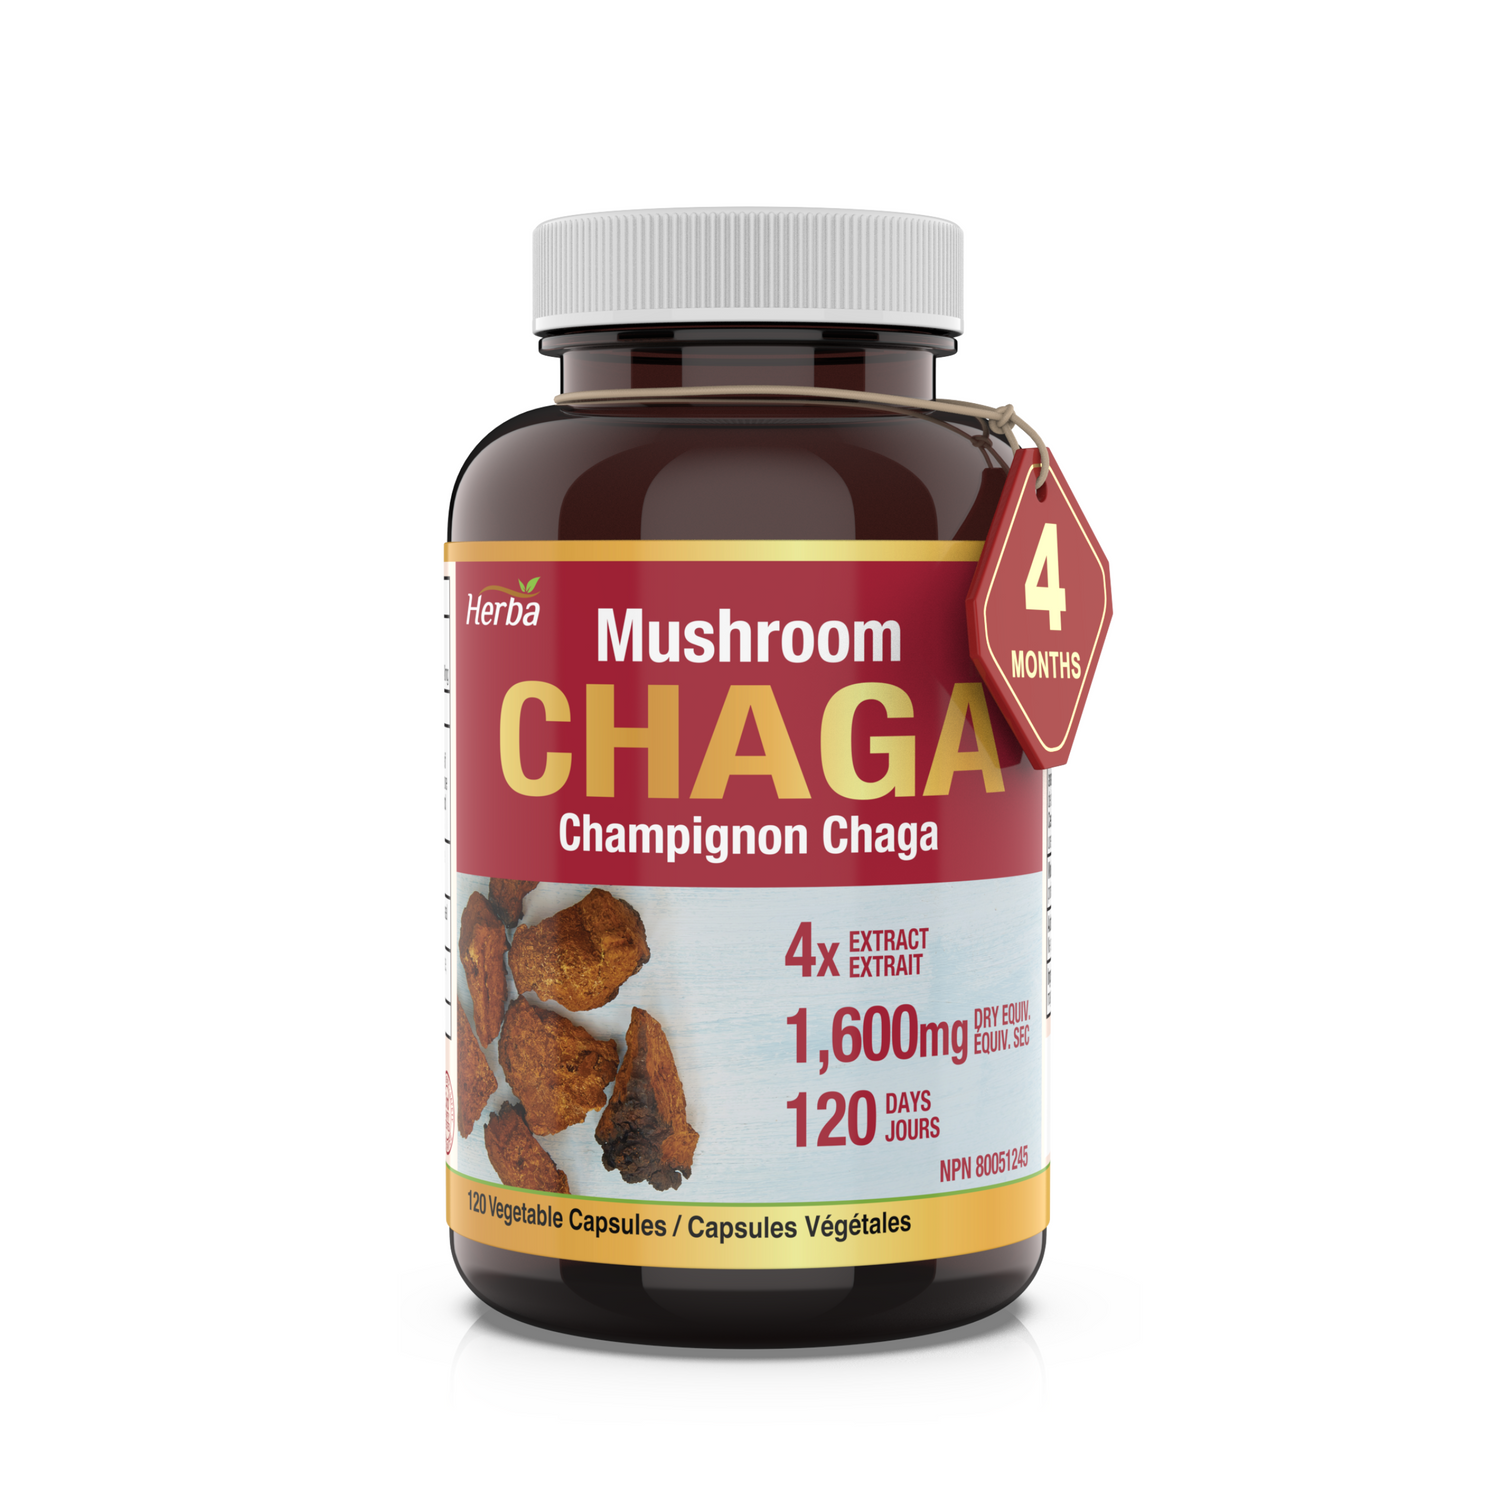 Herba Chaga Mushroom Capsules 400mg - 120 Vegetable Capsules | 4:1 High Concentrate